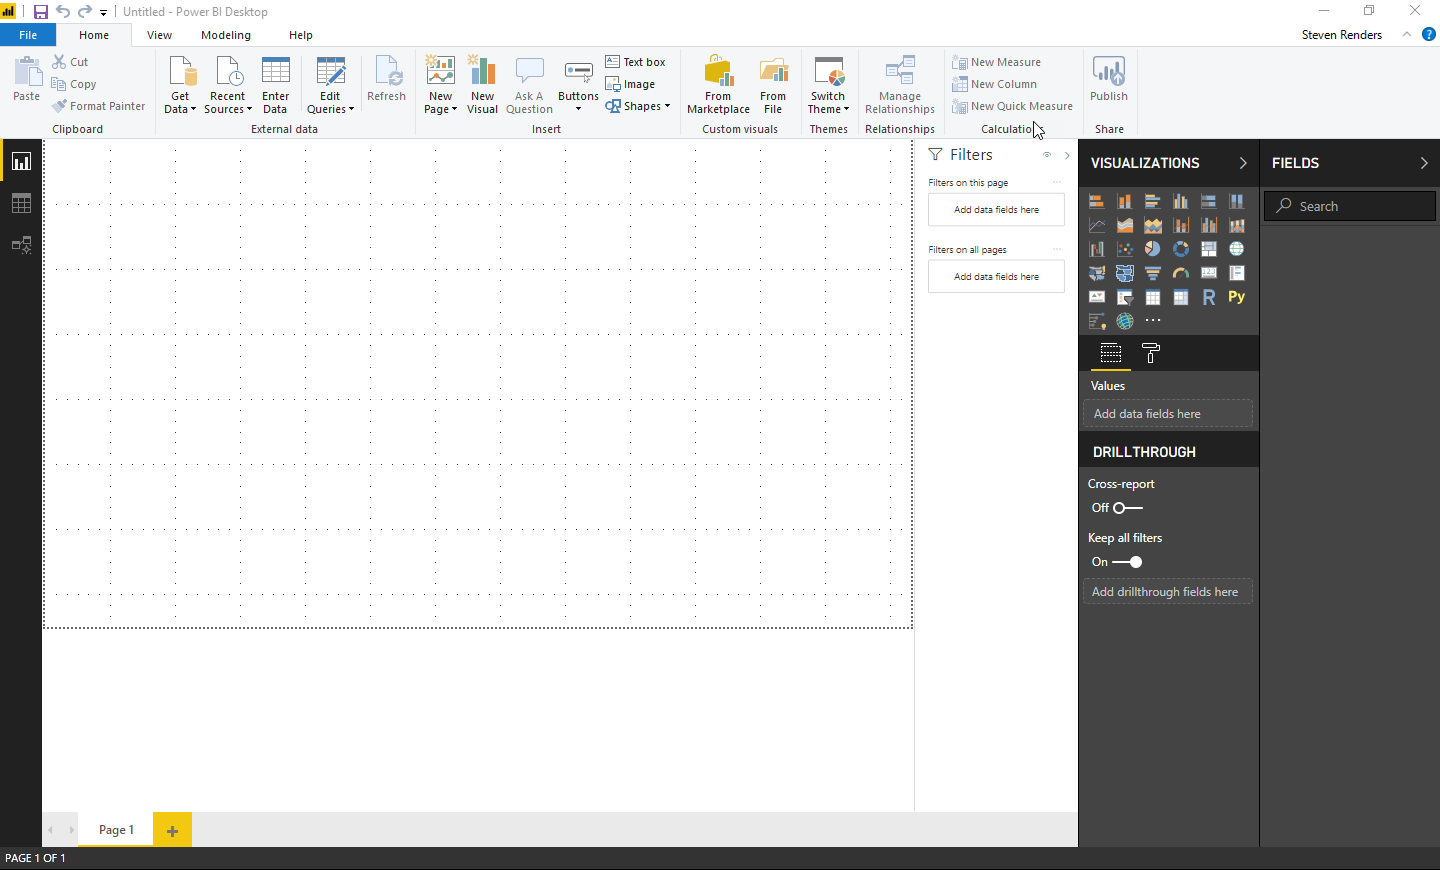 Screenshot of the Power BI desktop launched.